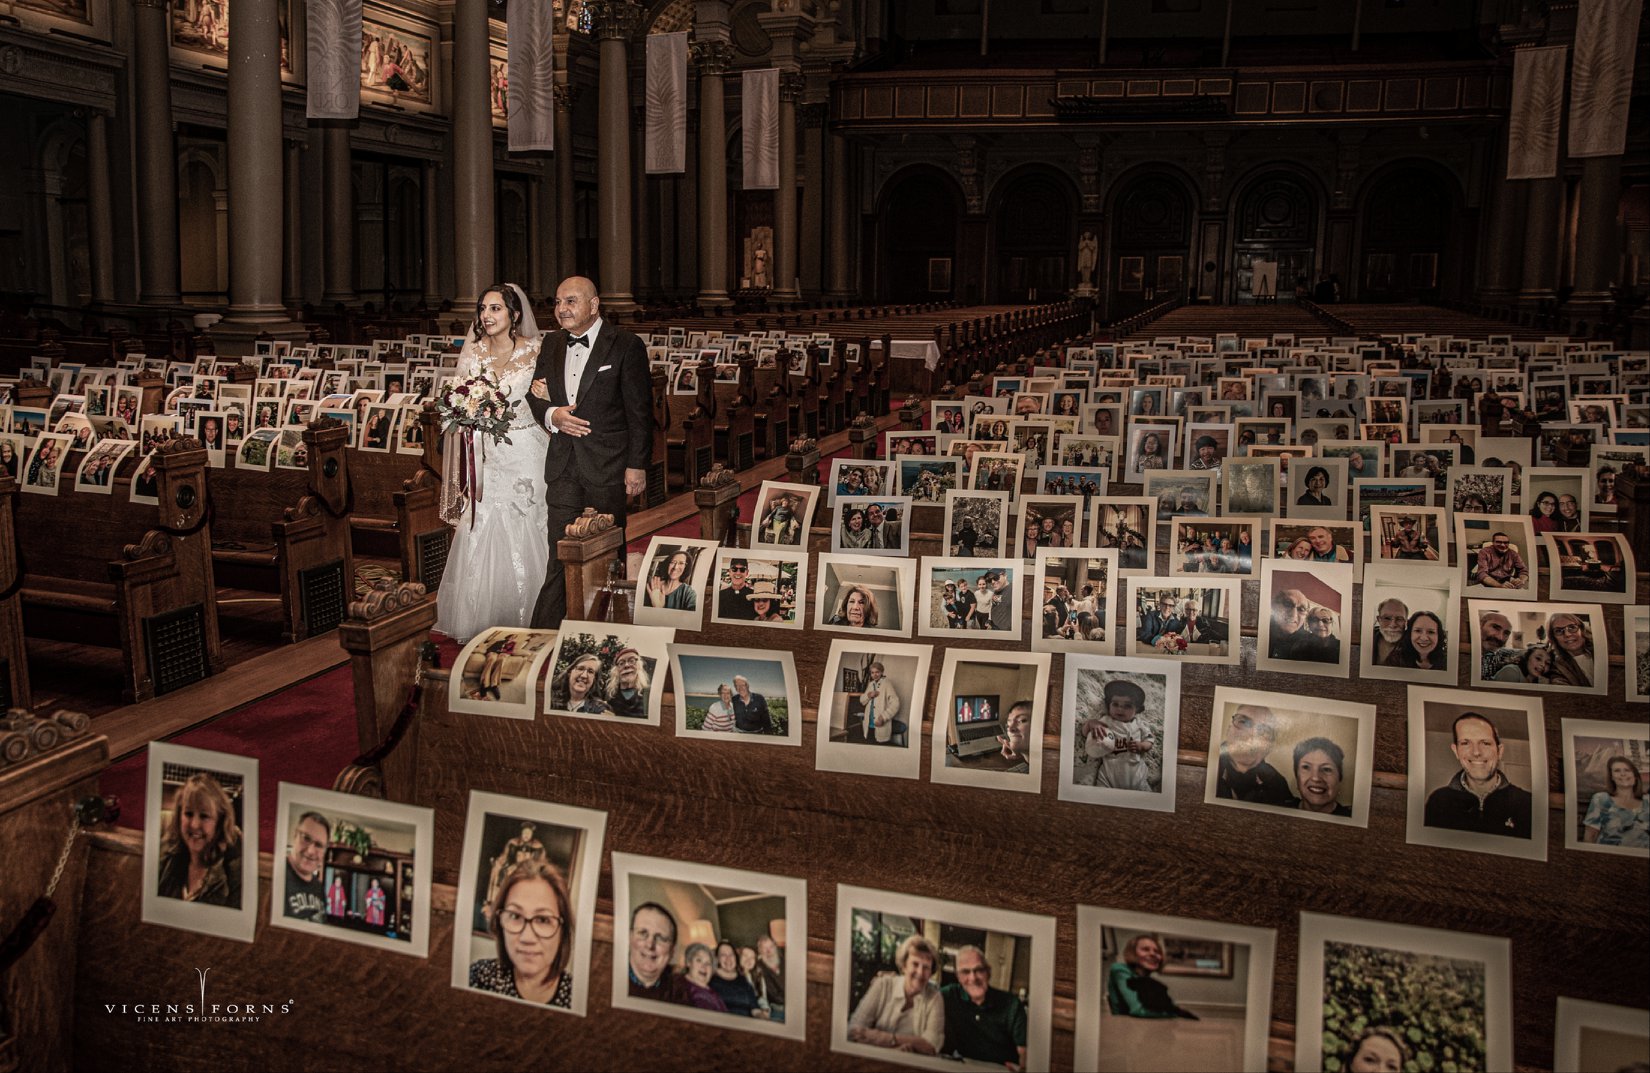 Celebrar boda con fotos de invitados tras coronavirus